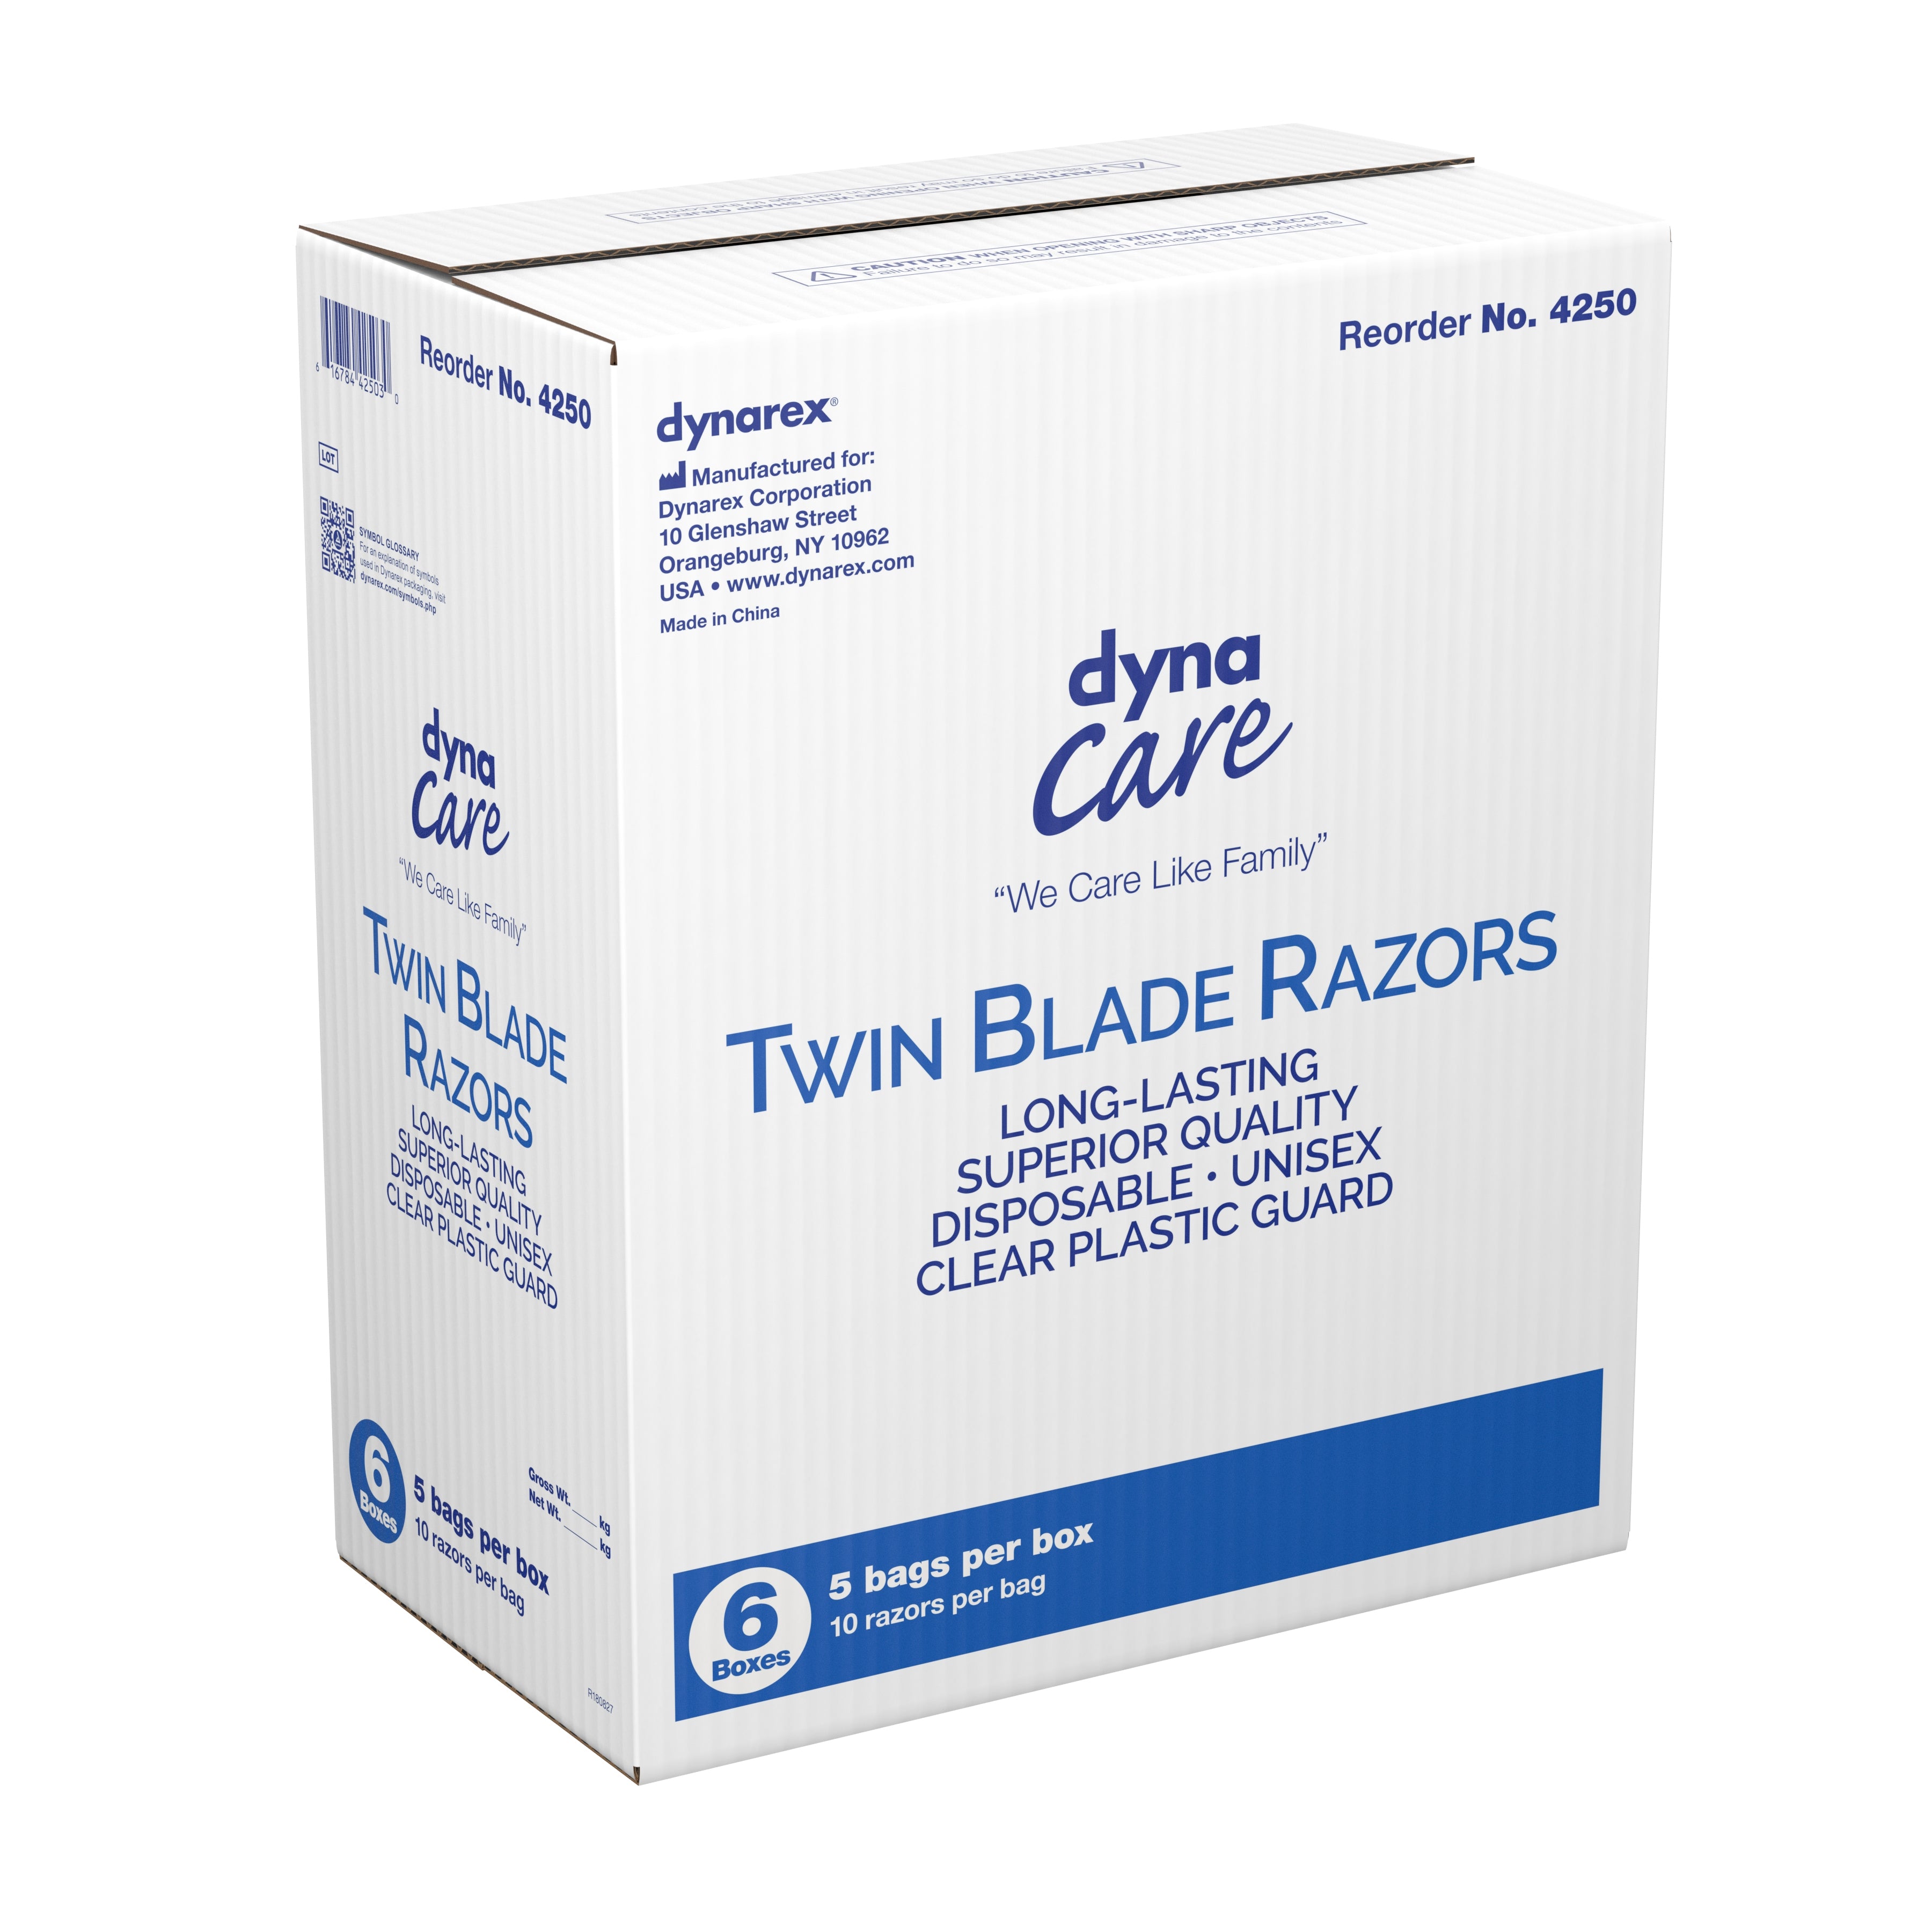 Razor dyna Care Twin Blade Disposable